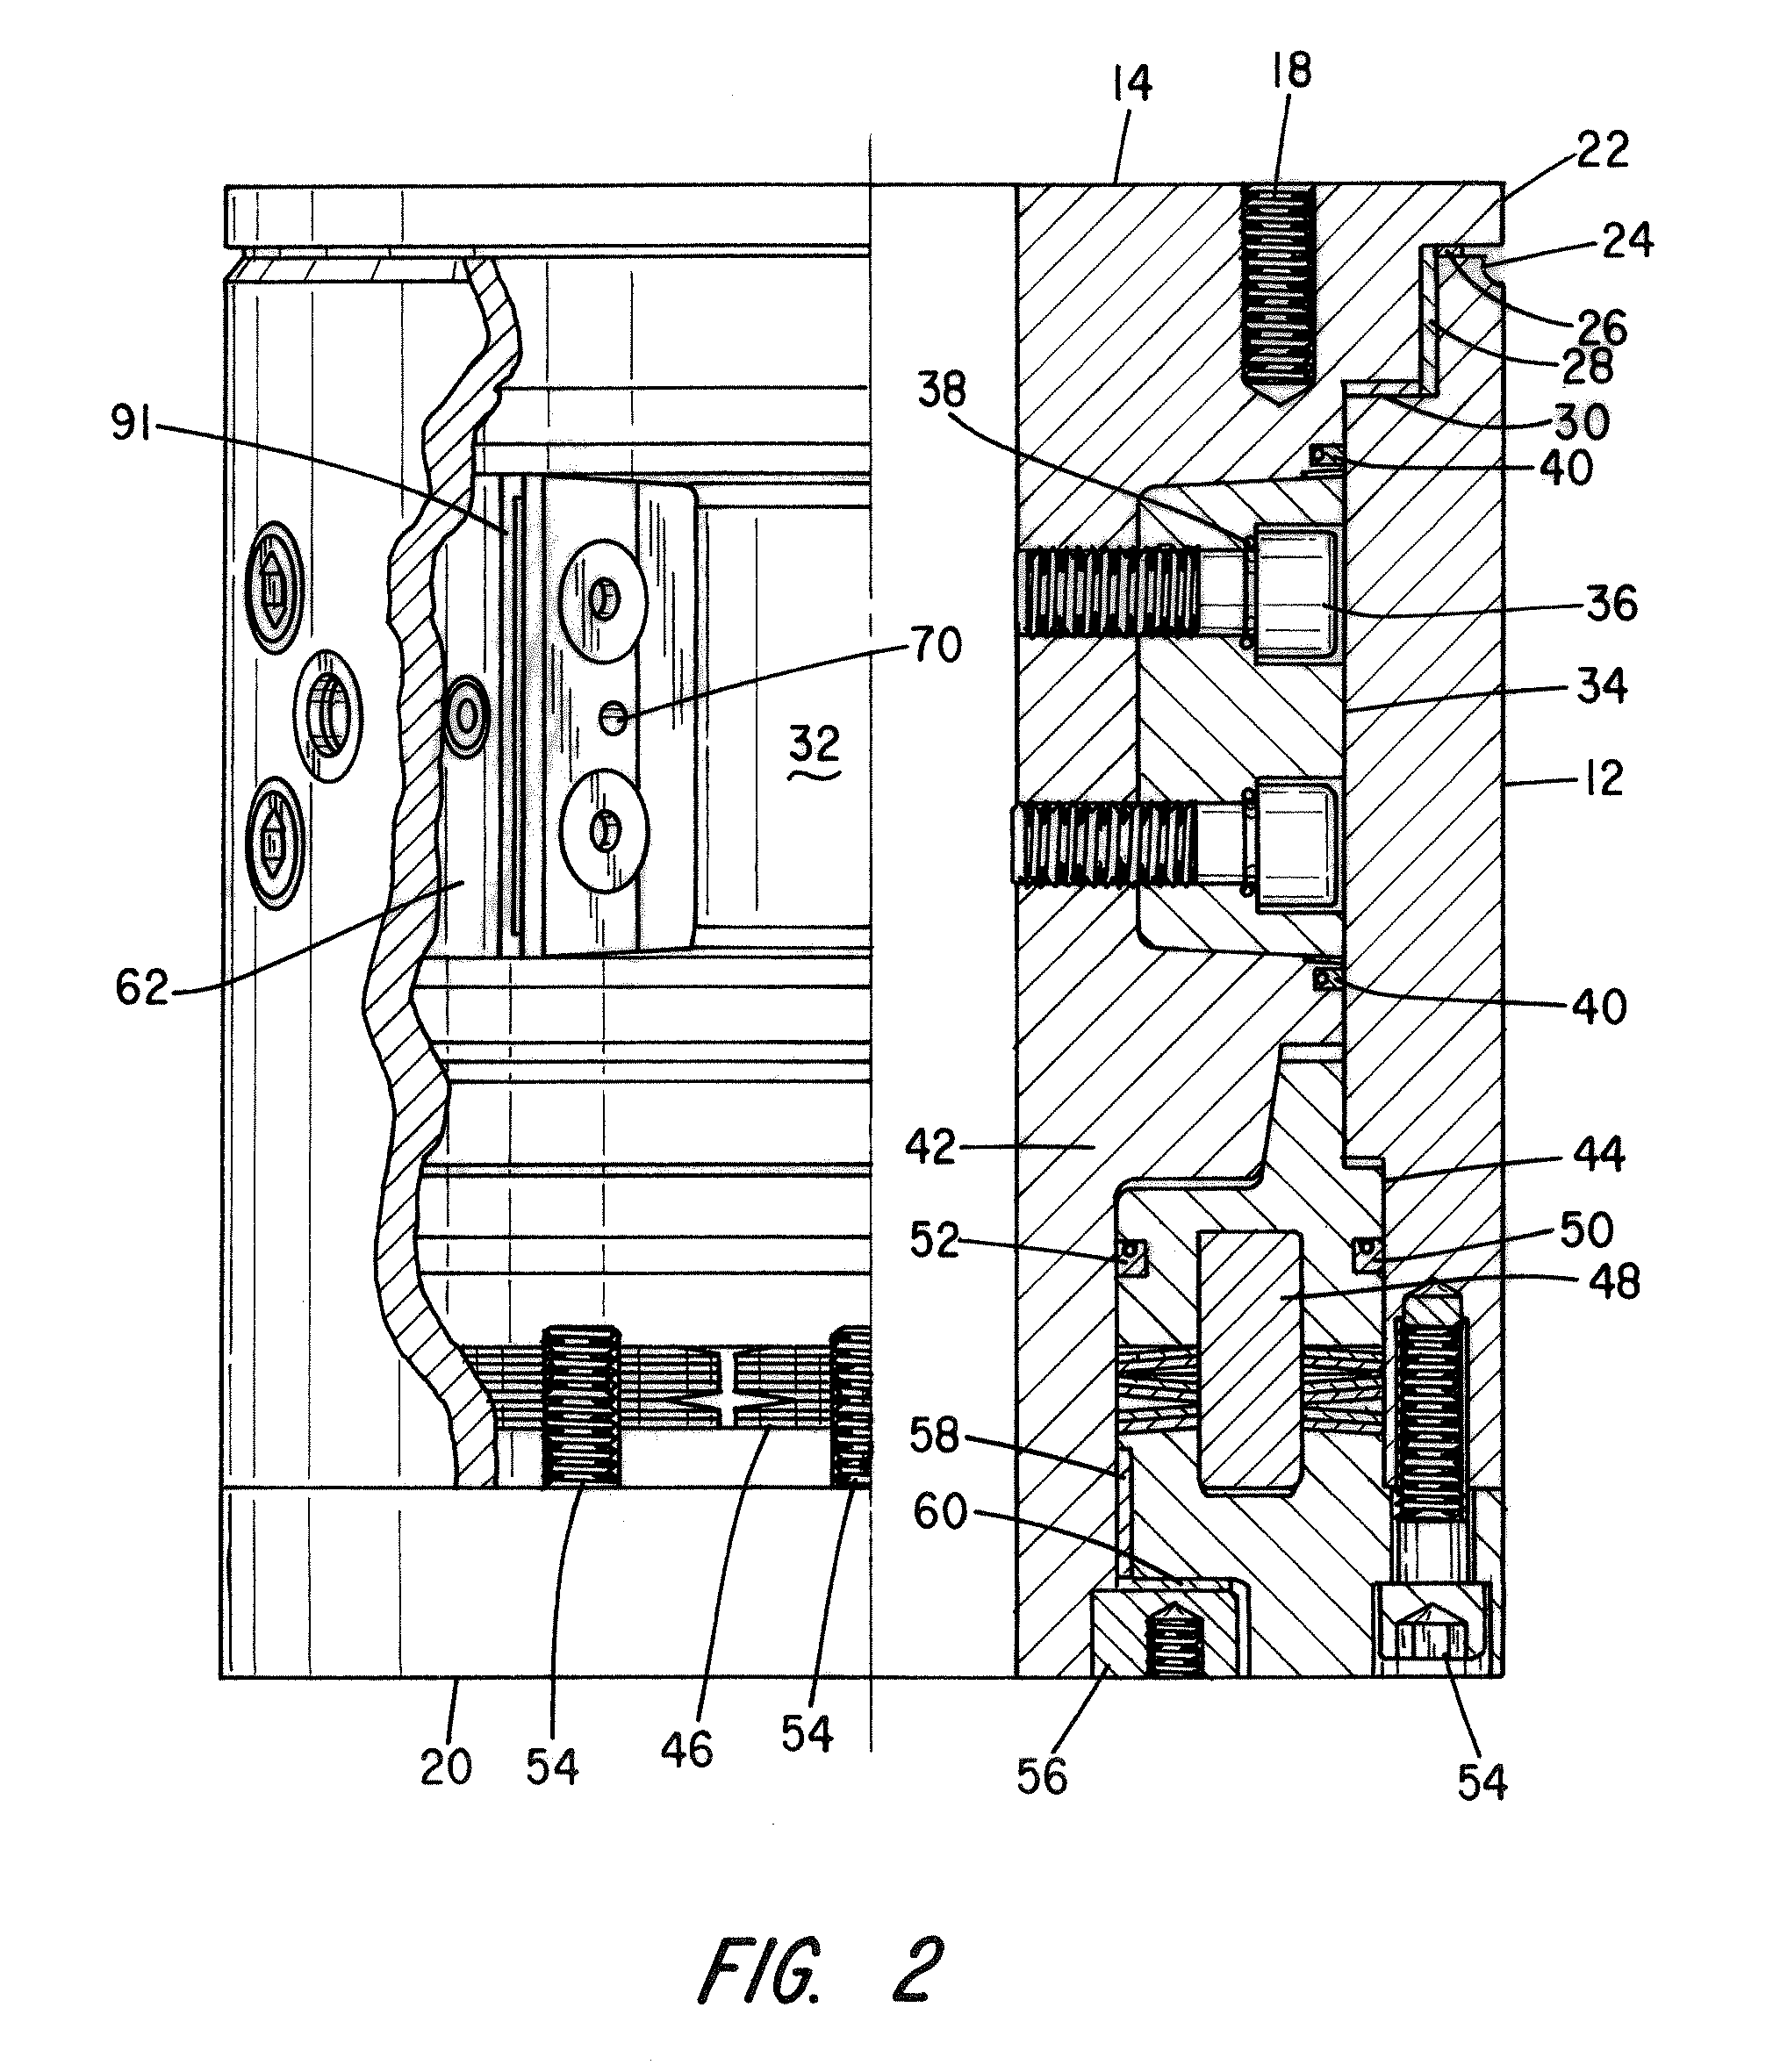 Rotary actuator with internal brake mechanism